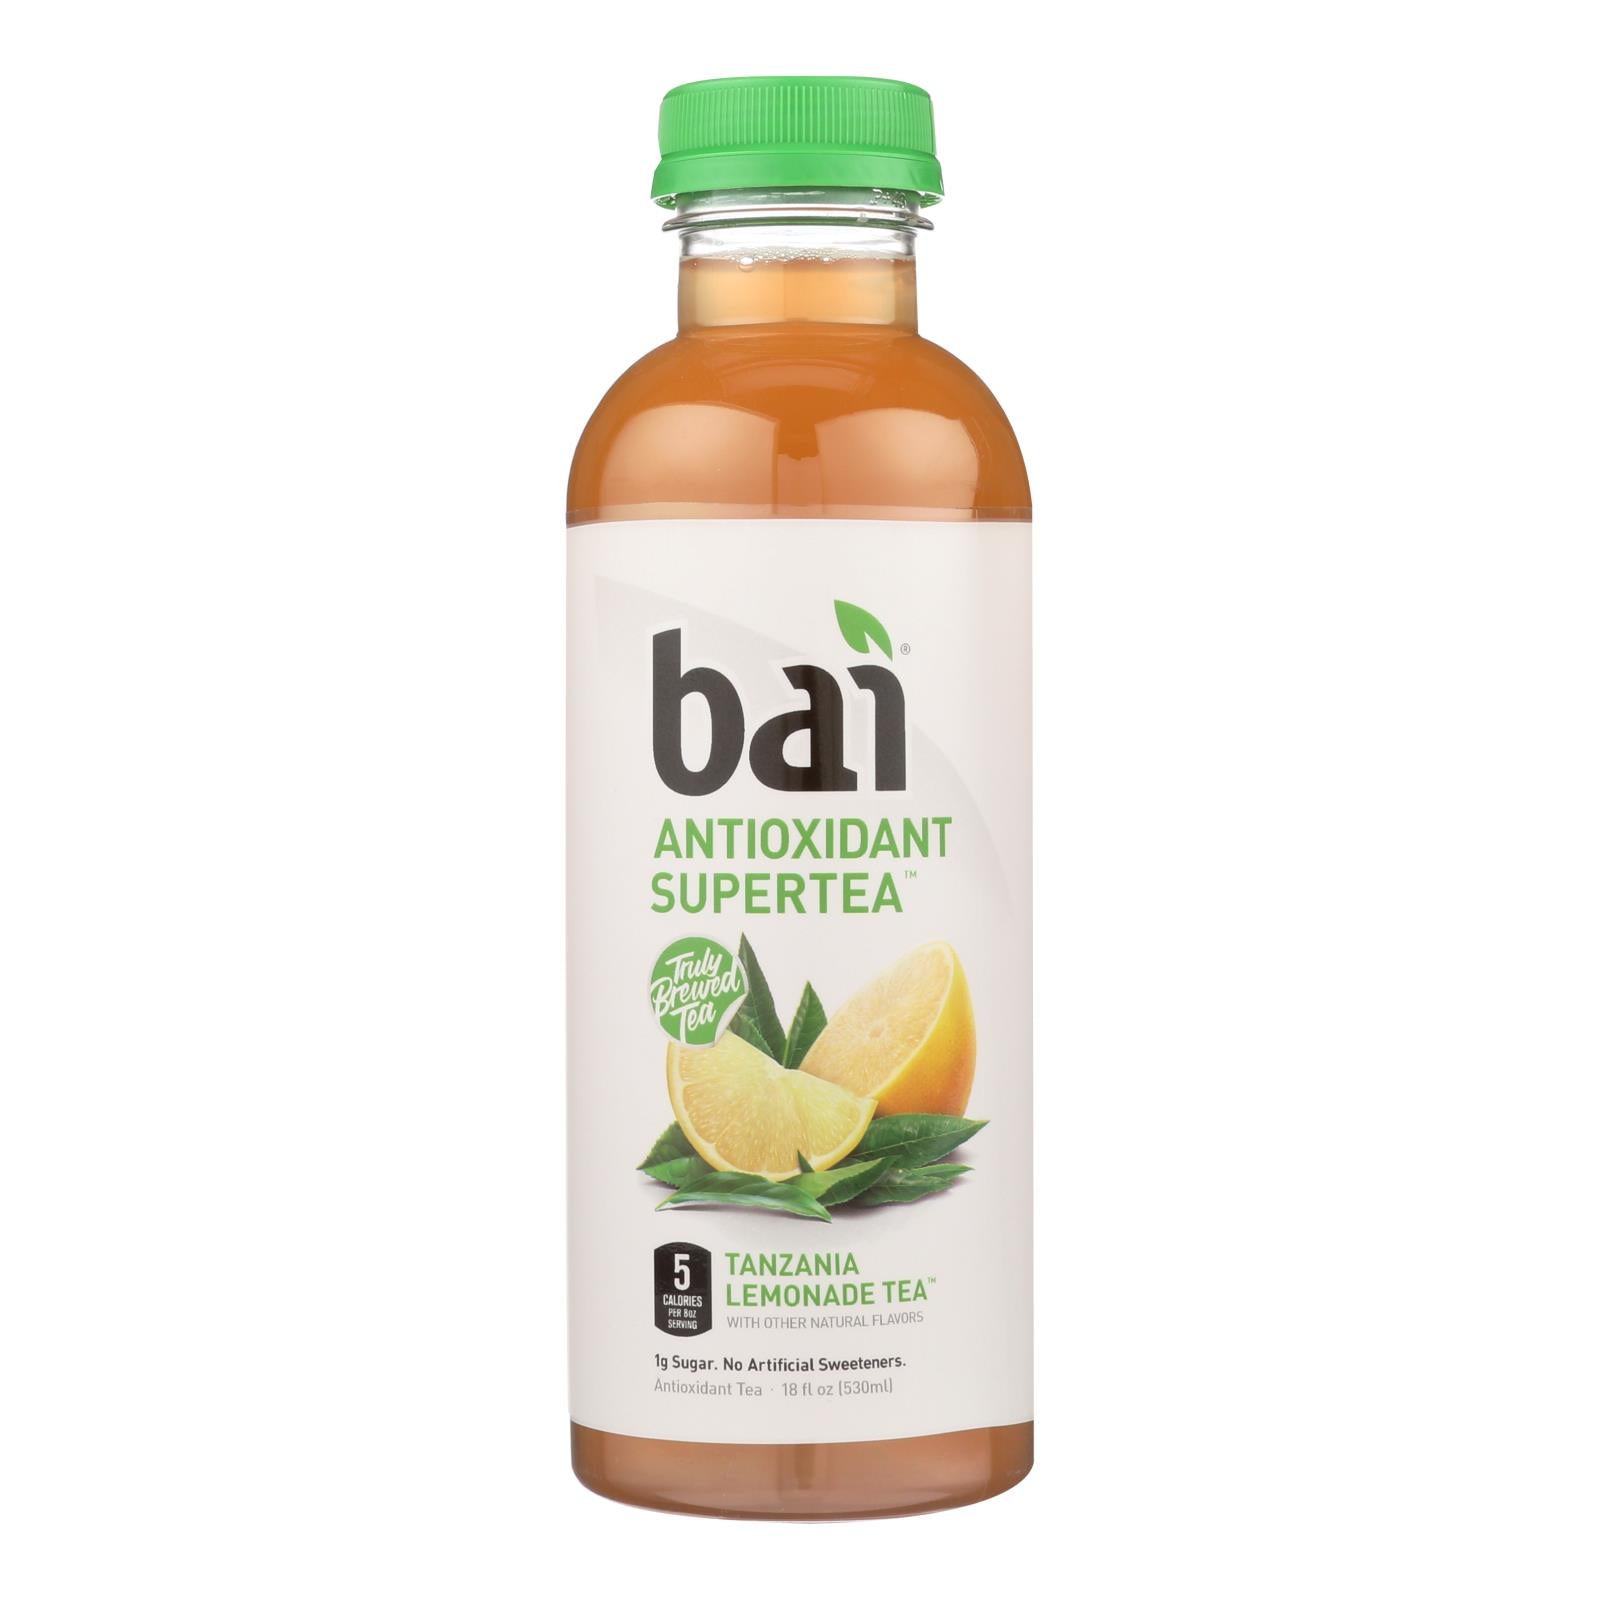 Bai, Bai Tanzania Lemonade Tea Antioxidant Supertea  - Case of 12 - 18 FZ (Pack of 12)